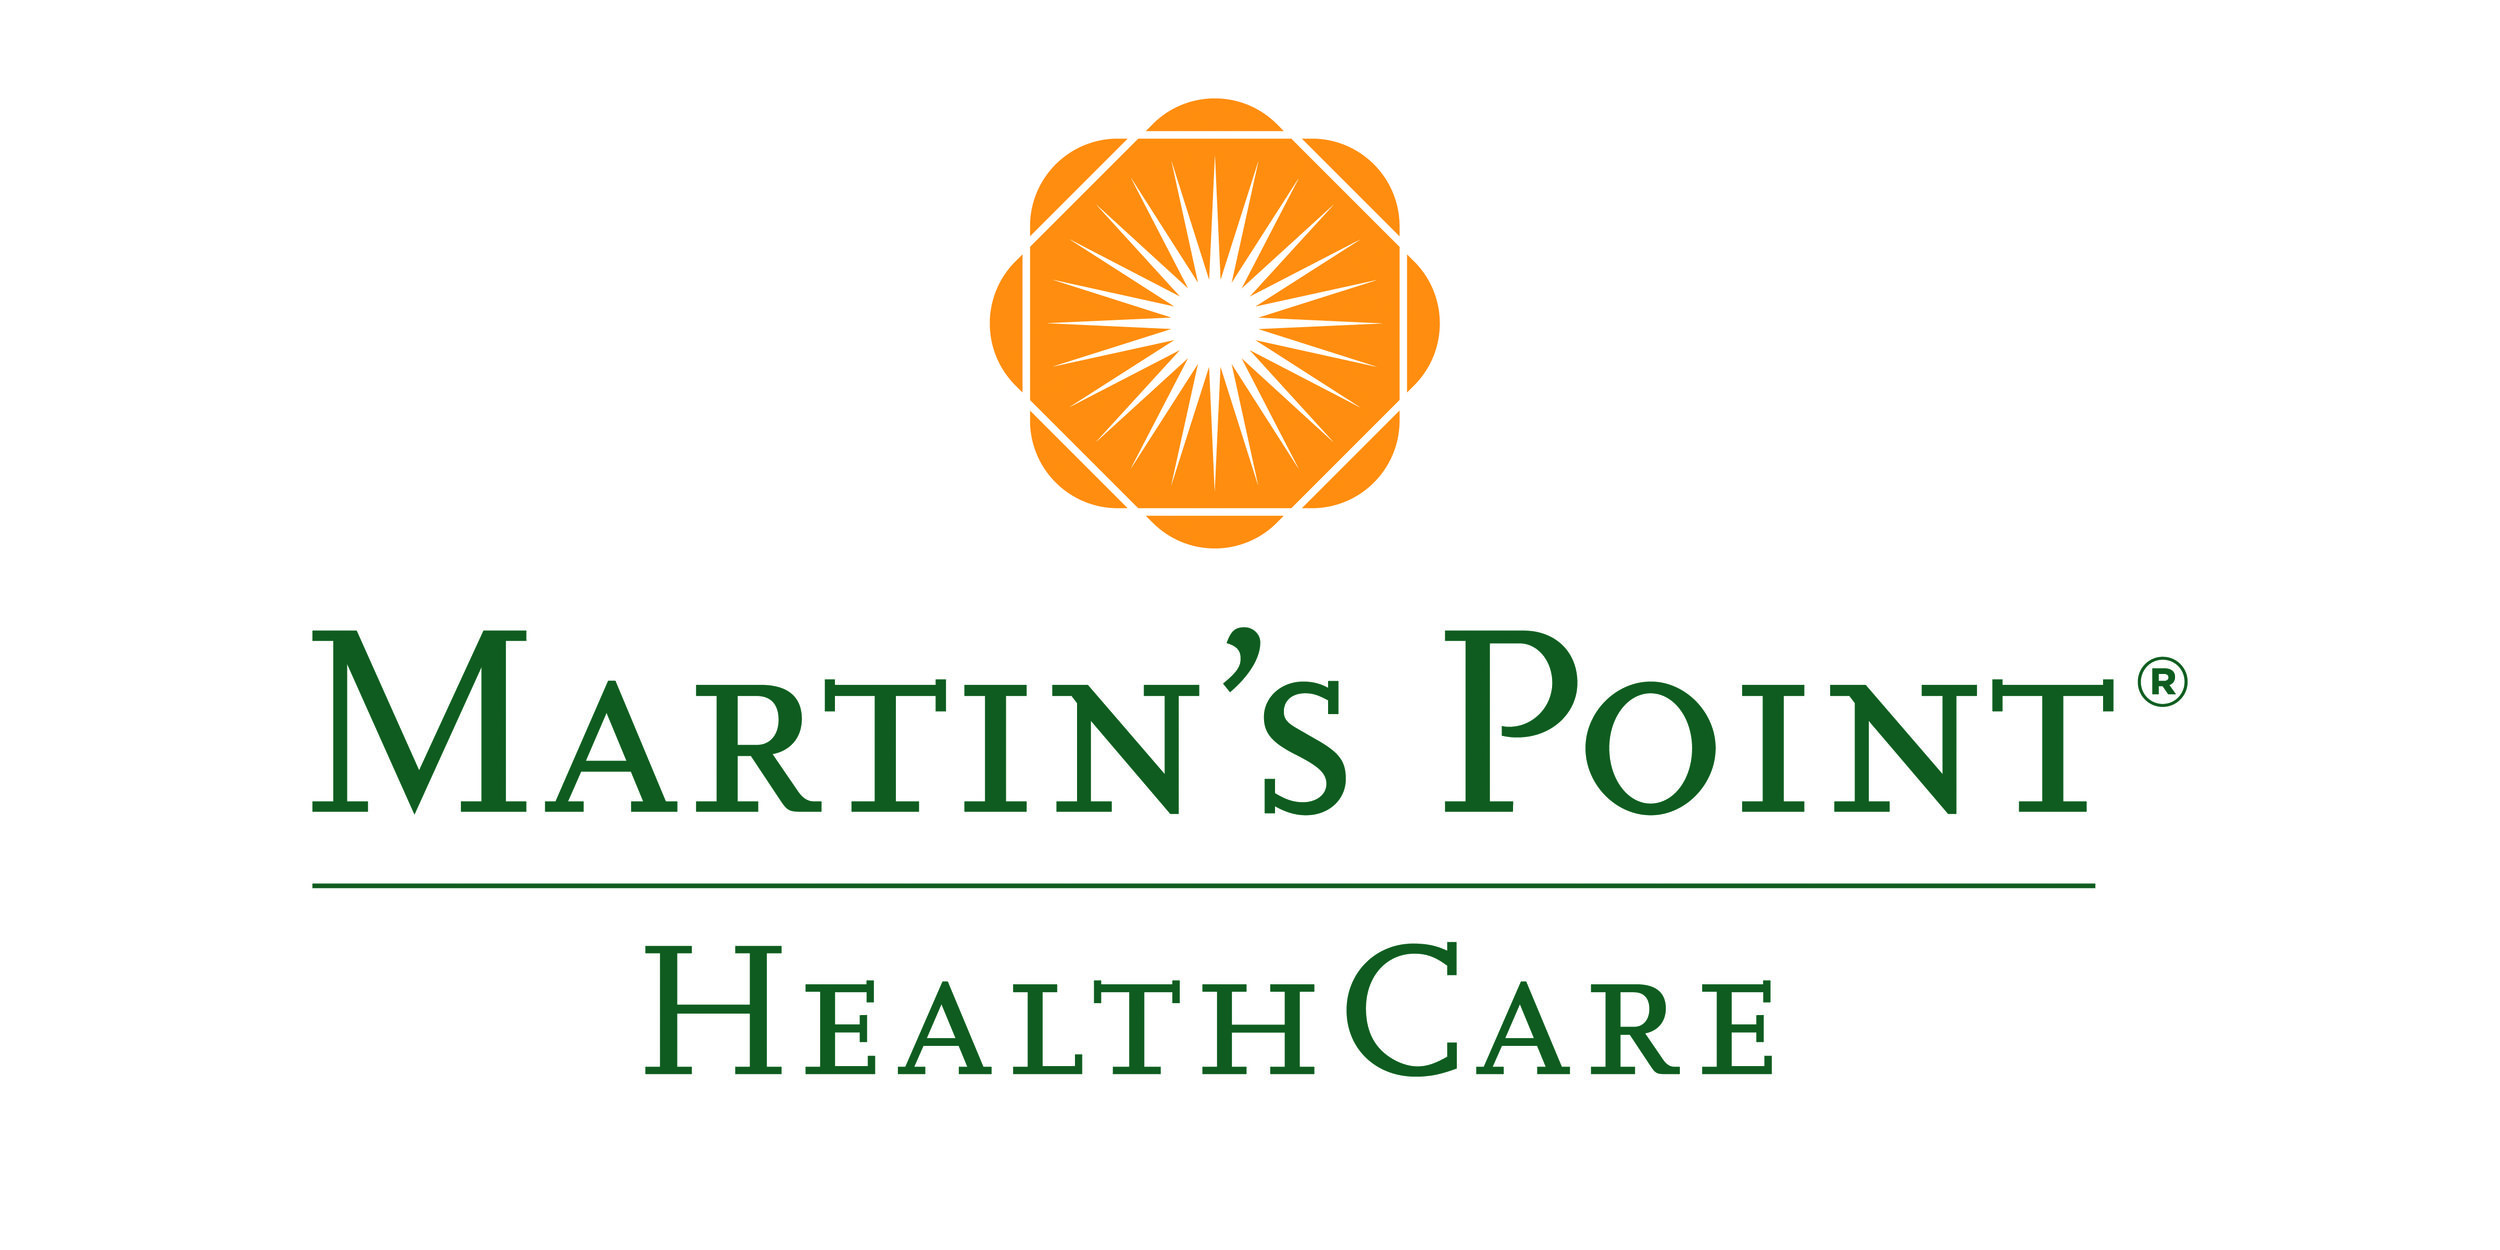 martins point logo.JPG